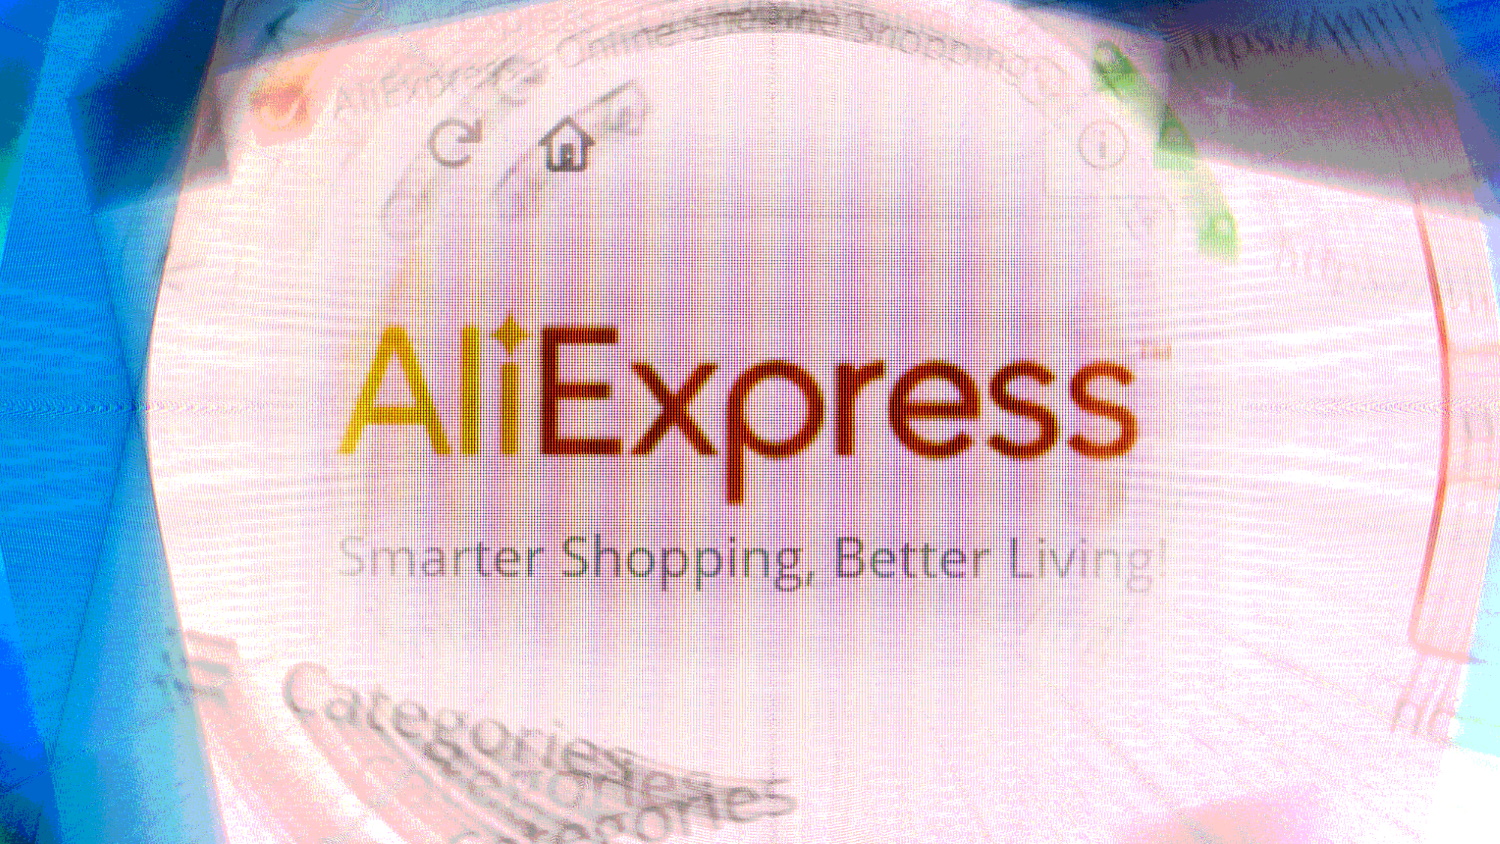 Aliexpress Parent Organization